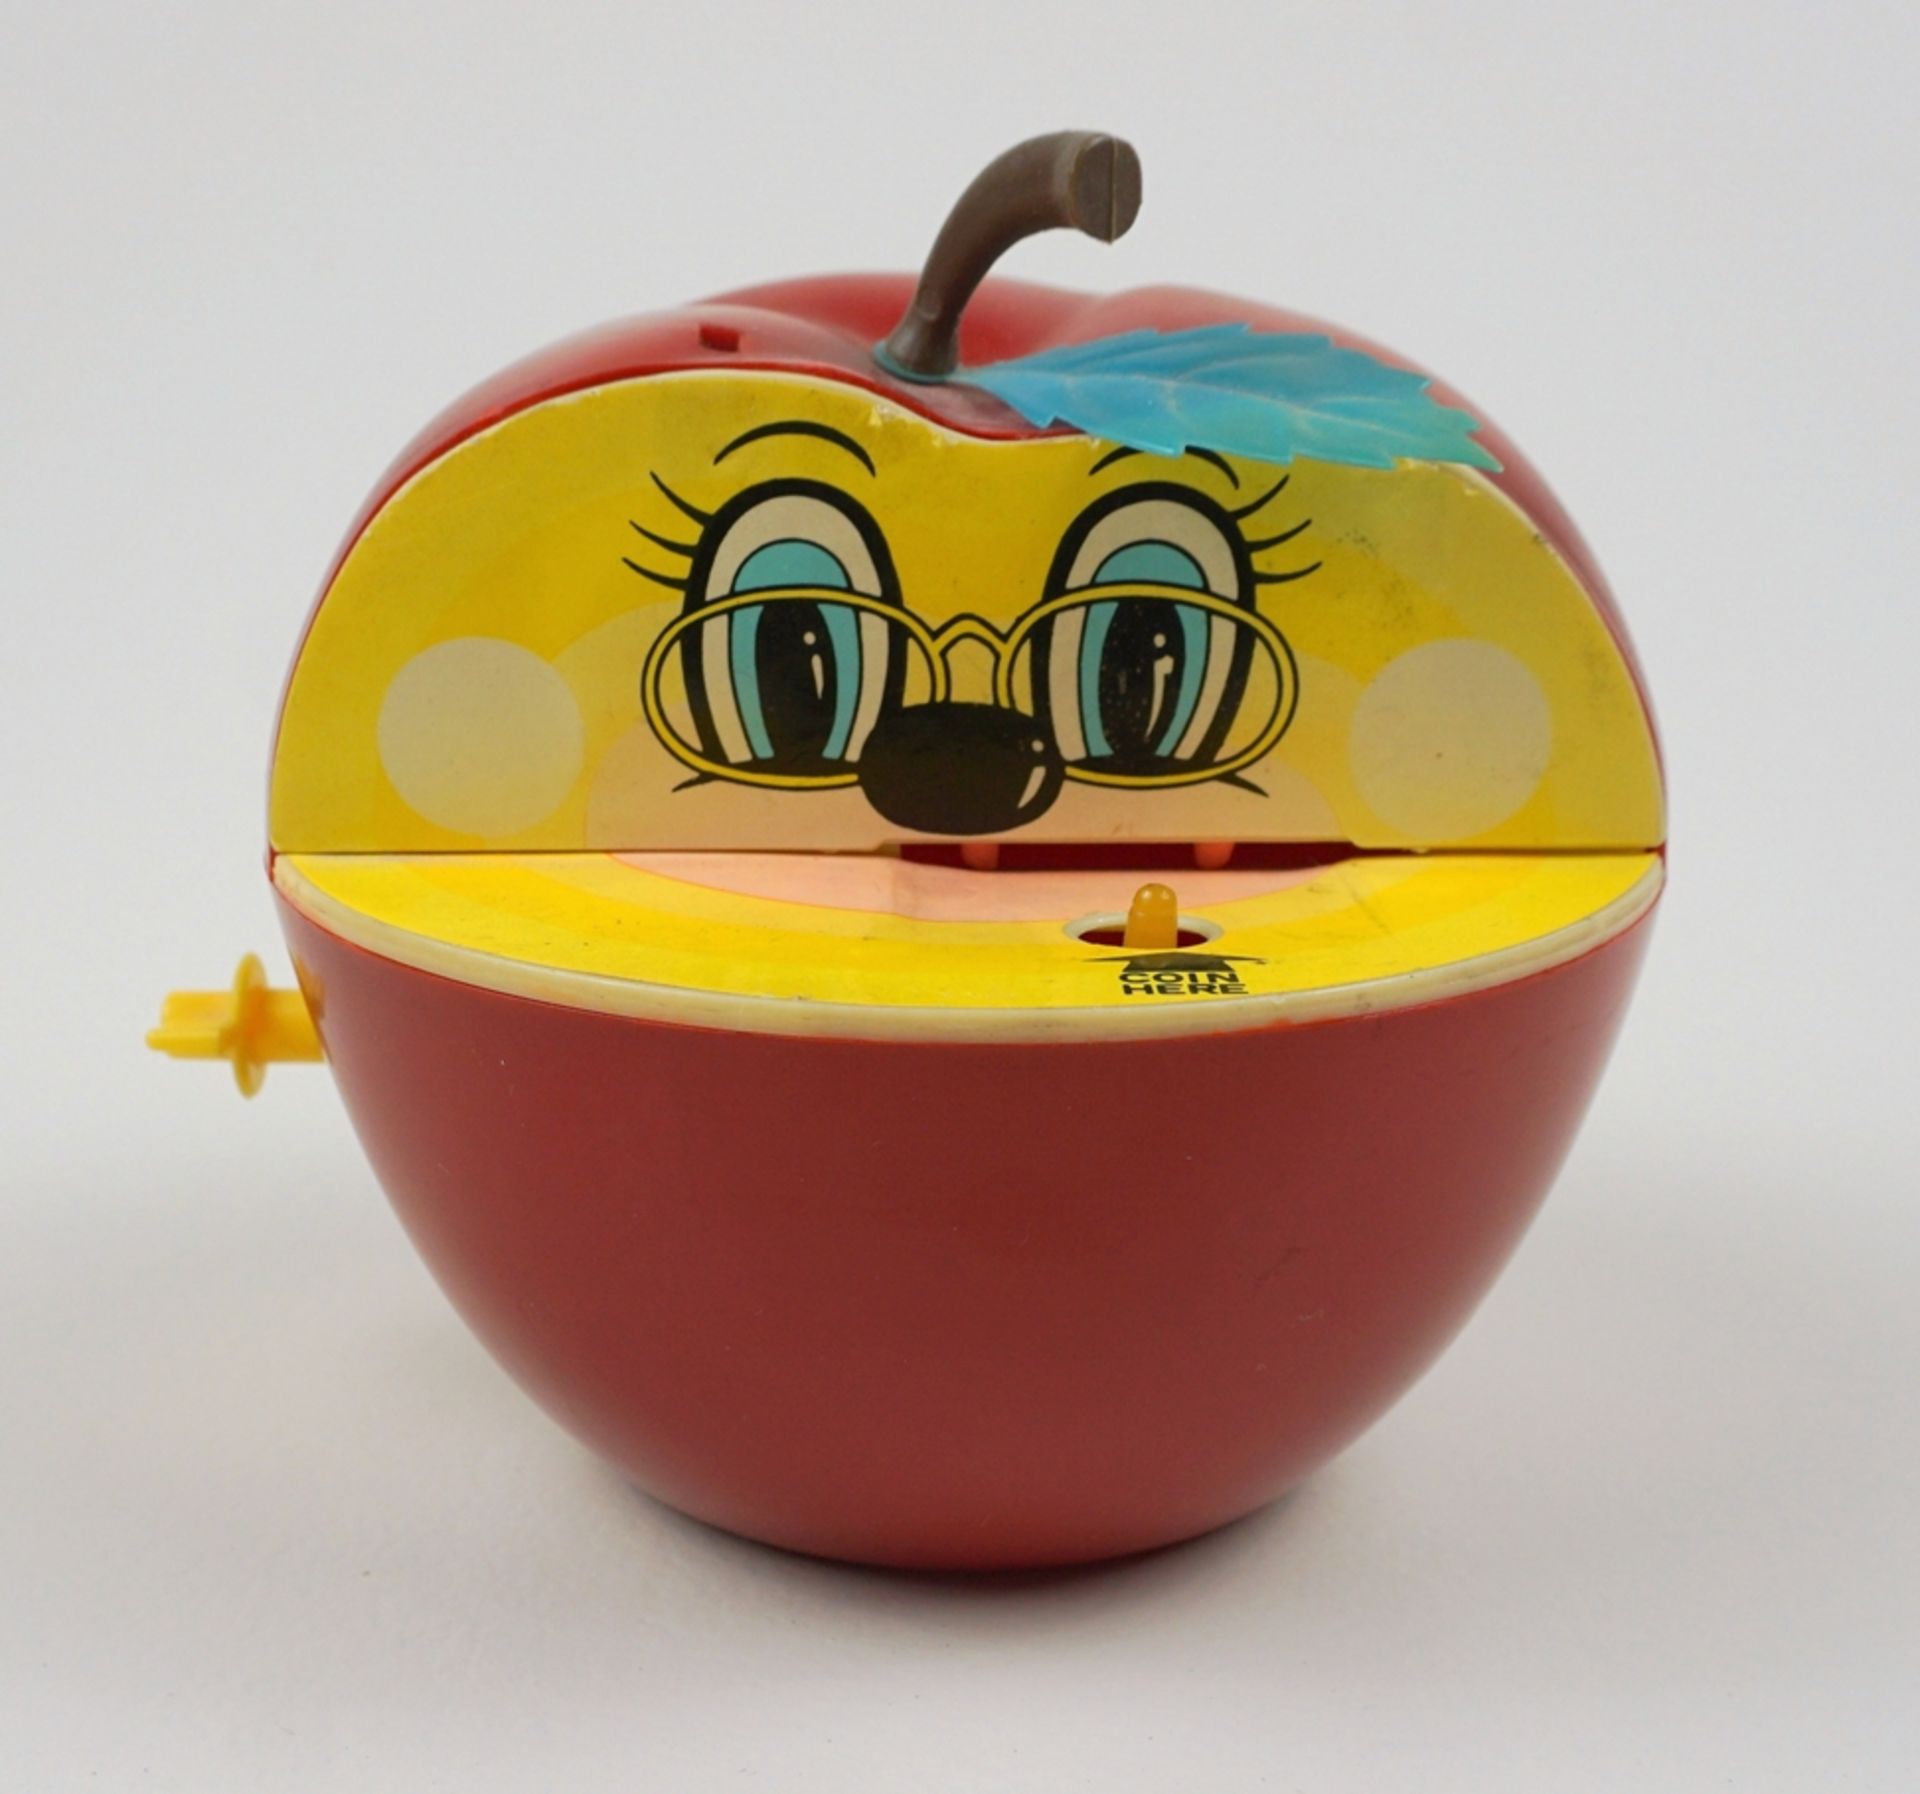 Spardose "Apfel" mit Wurm, Apple Bank, Everlast Toys Nr.0527, Hongkong, 1970er Jahre